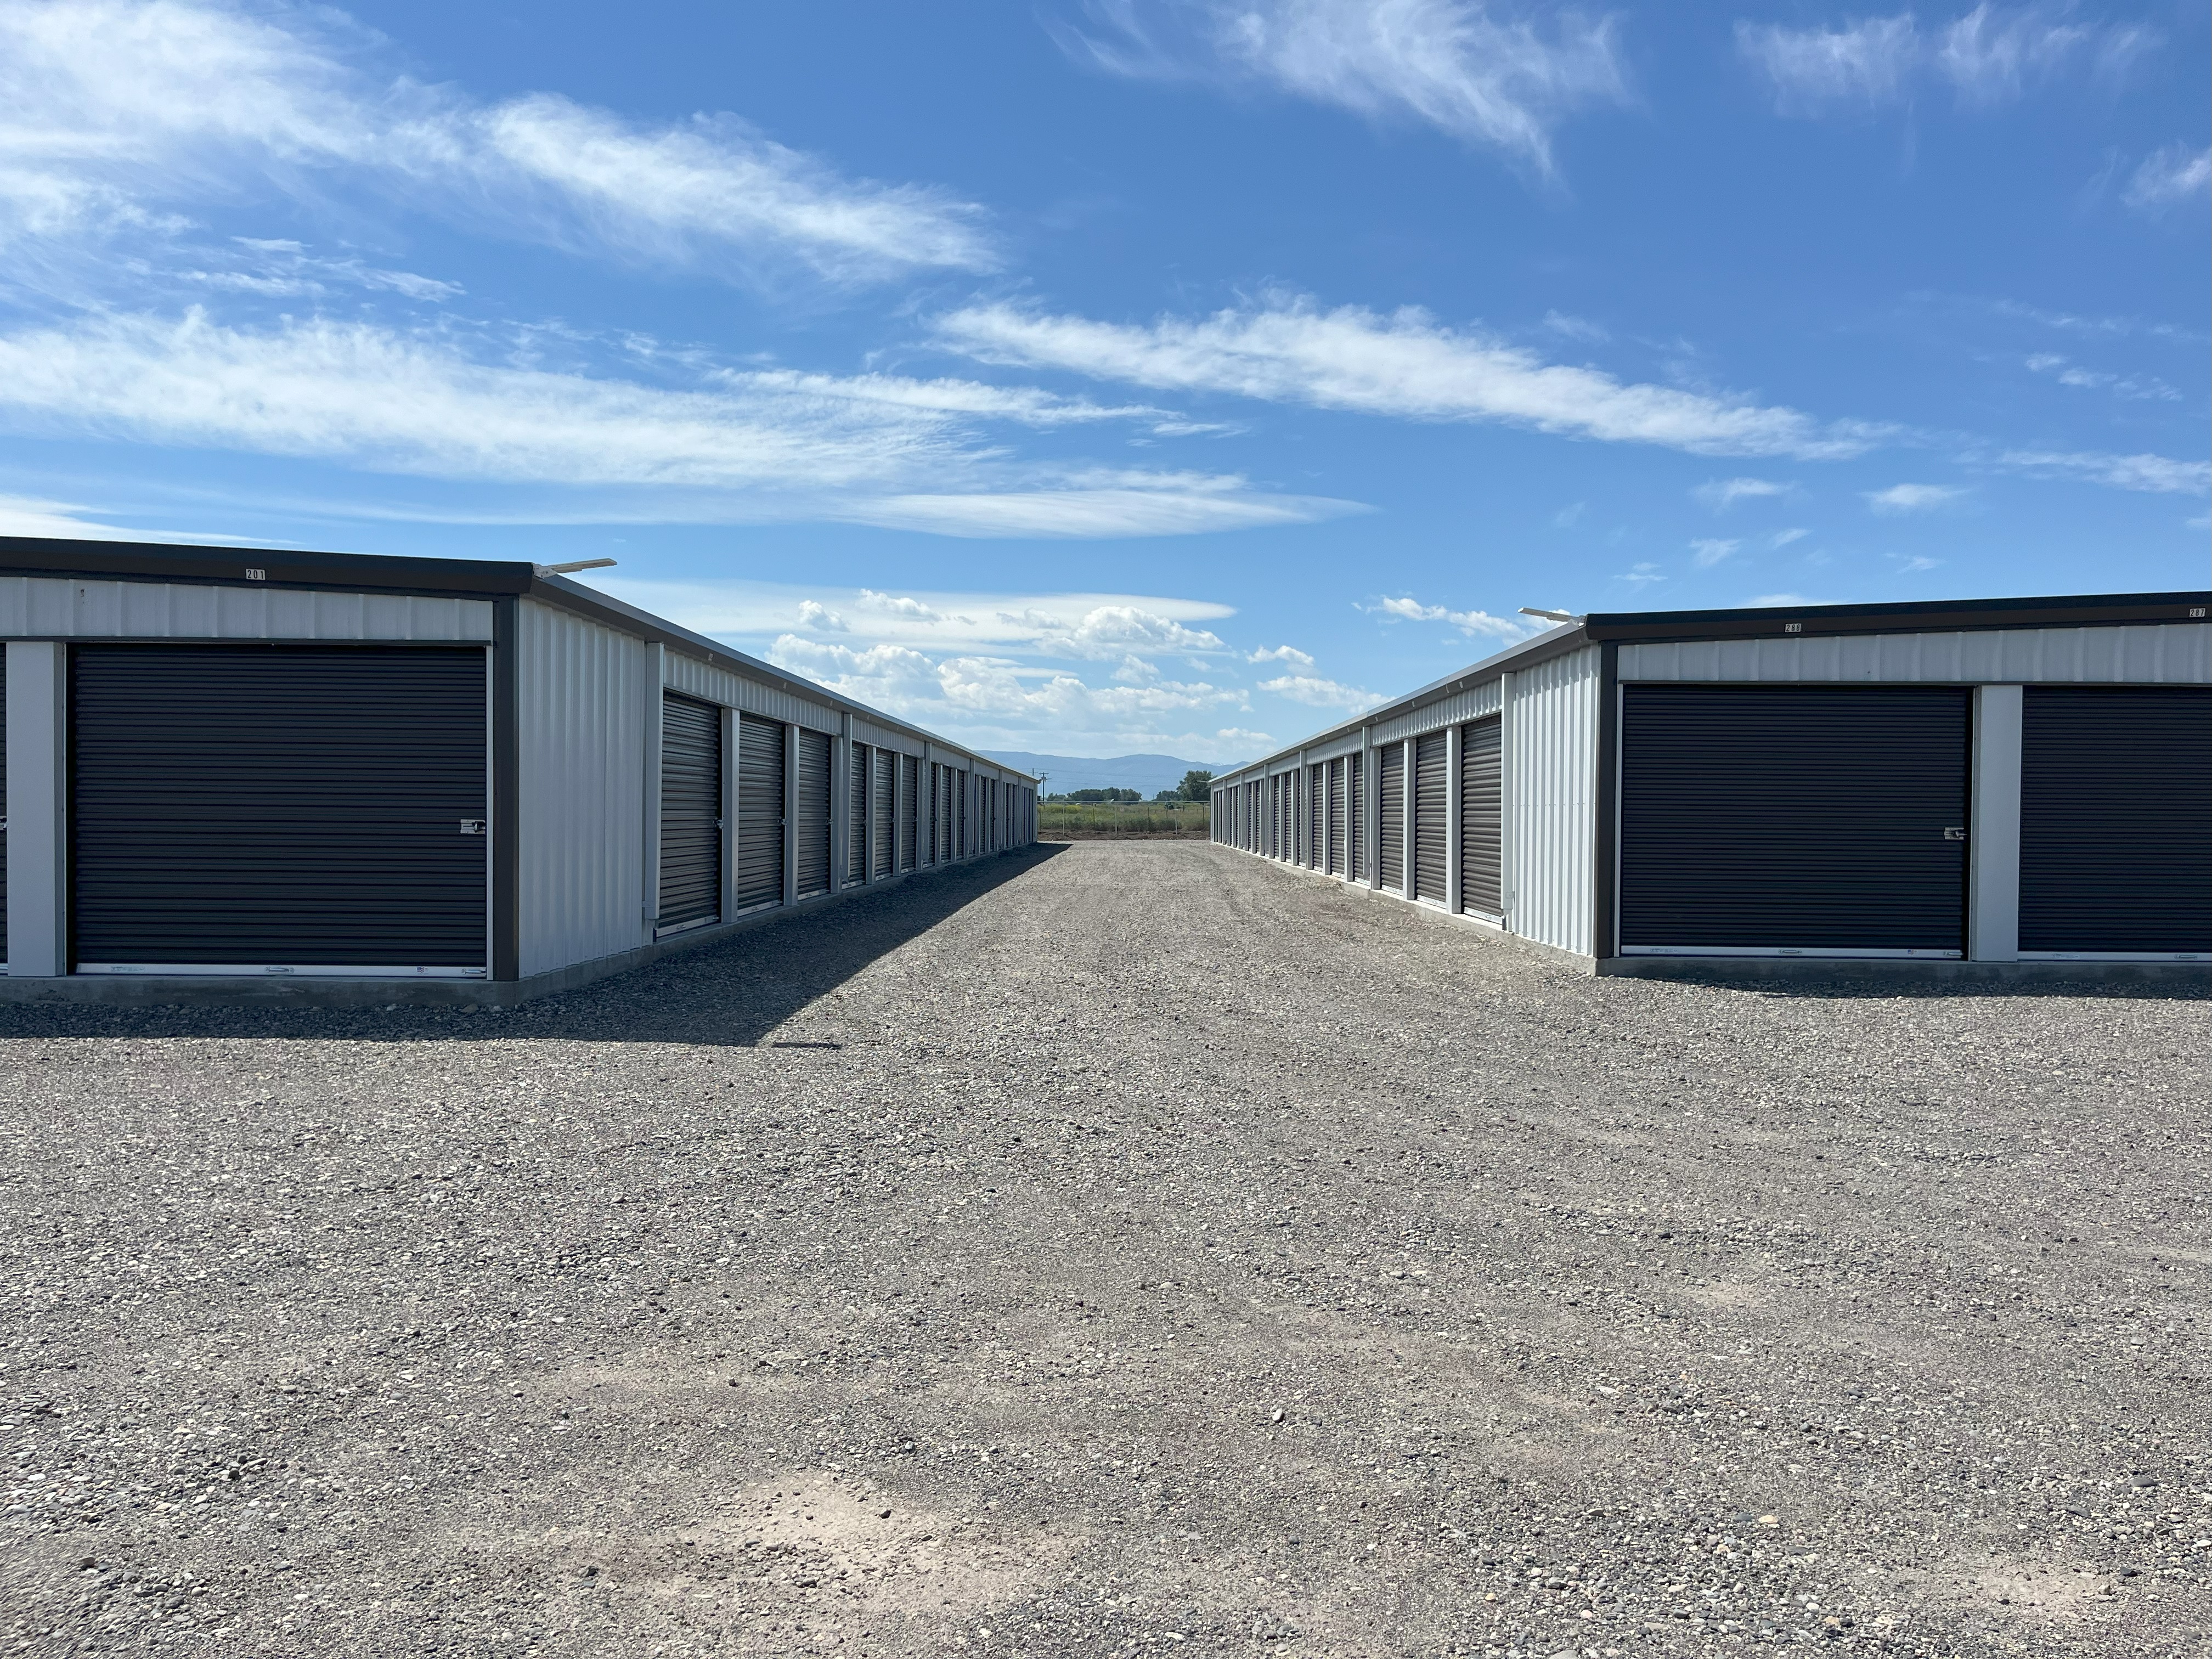 yellowstone airport storage drive up storage buildings